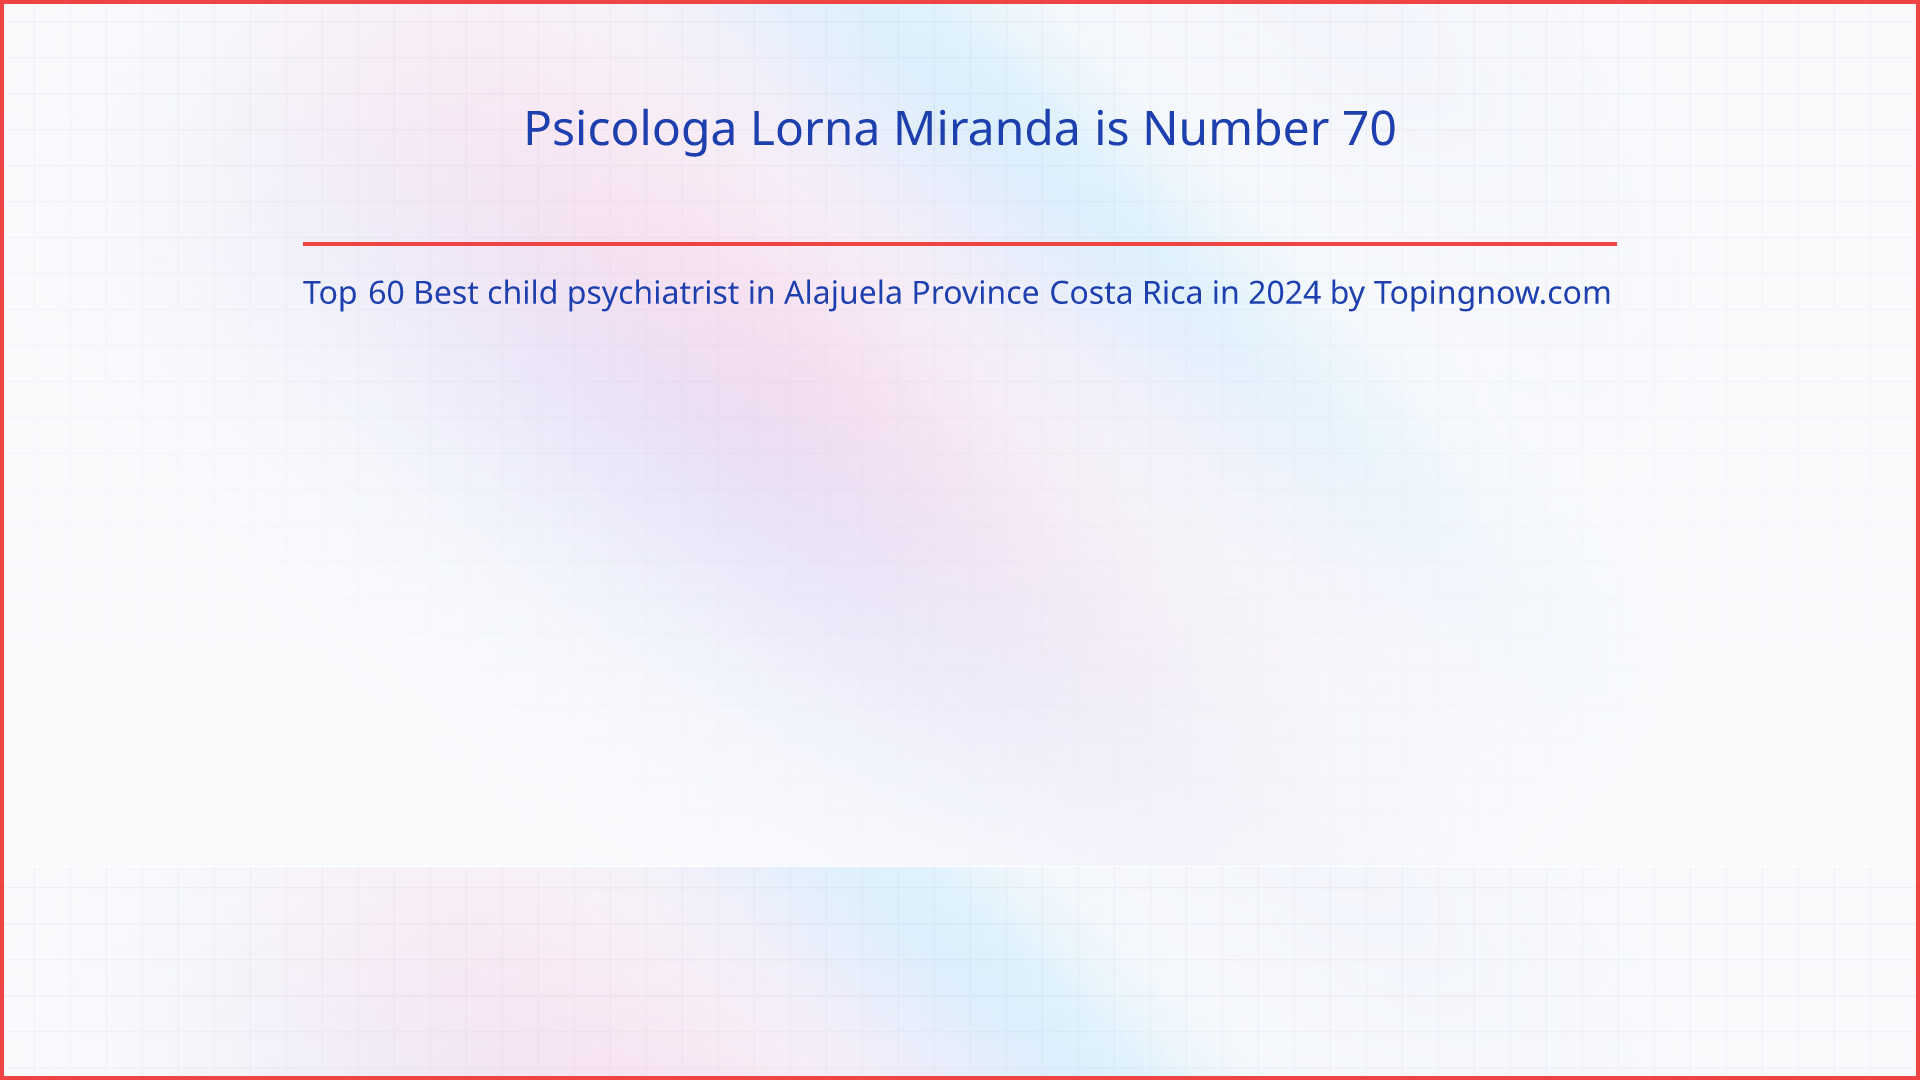 Psicologa Lorna Miranda: Top 60 Best child psychiatrist in Alajuela Province Costa Rica in 2024